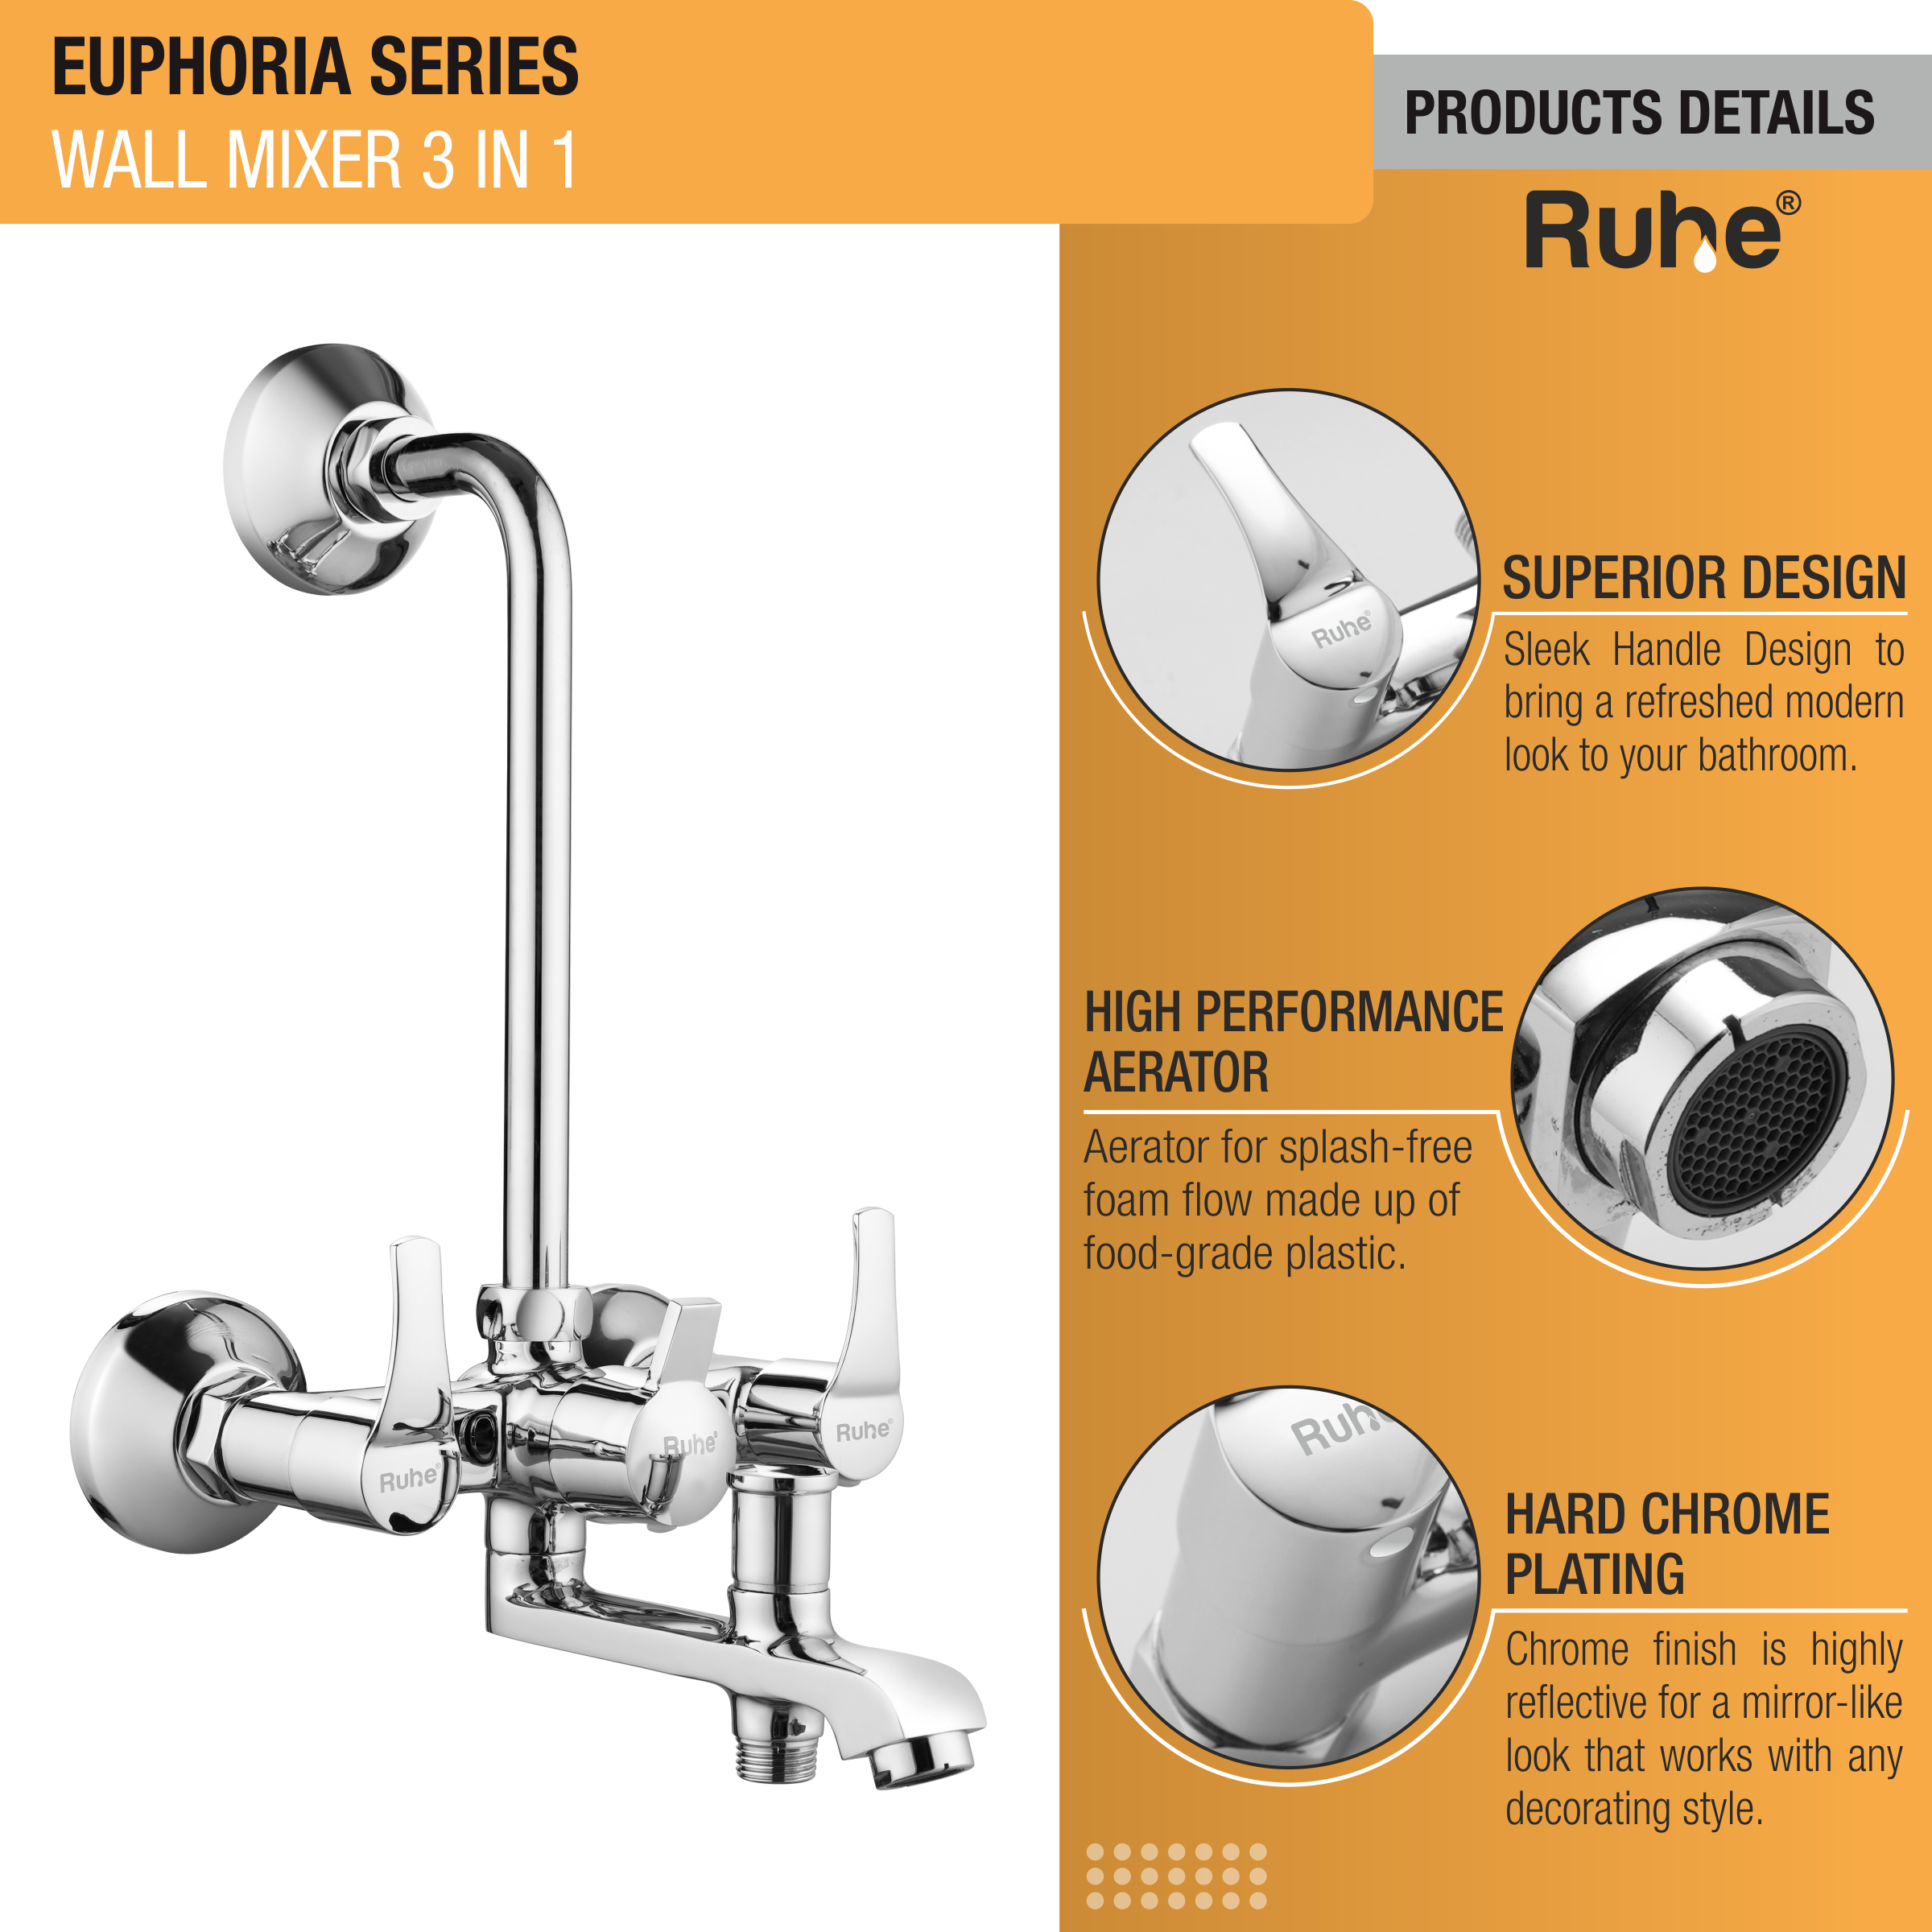 Euphoria Wall Mixer 3 in 1 Faucet details